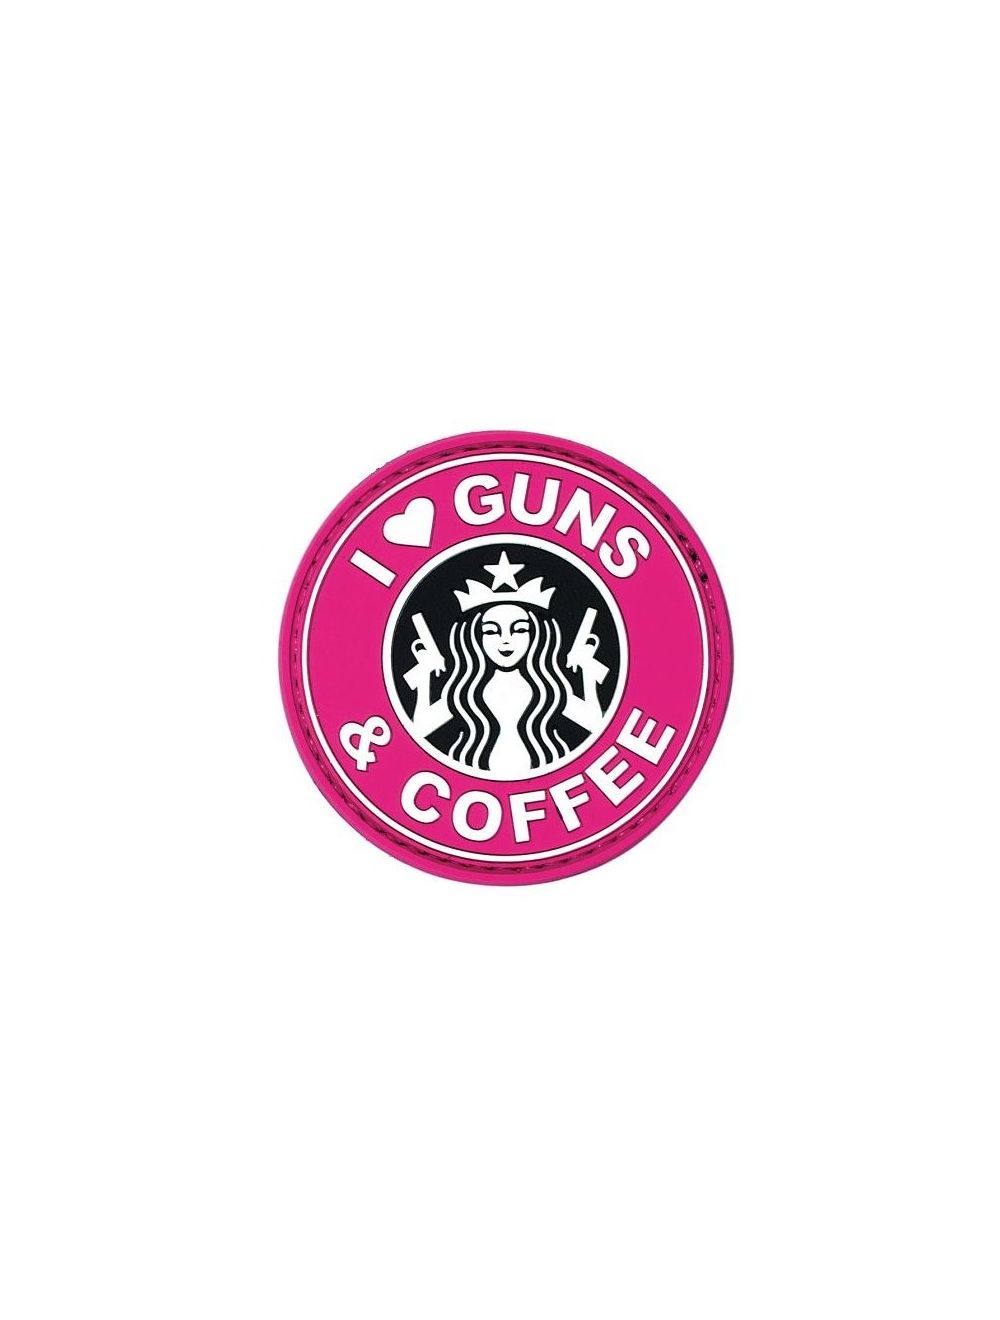 I Love Guns & Coffee Patch